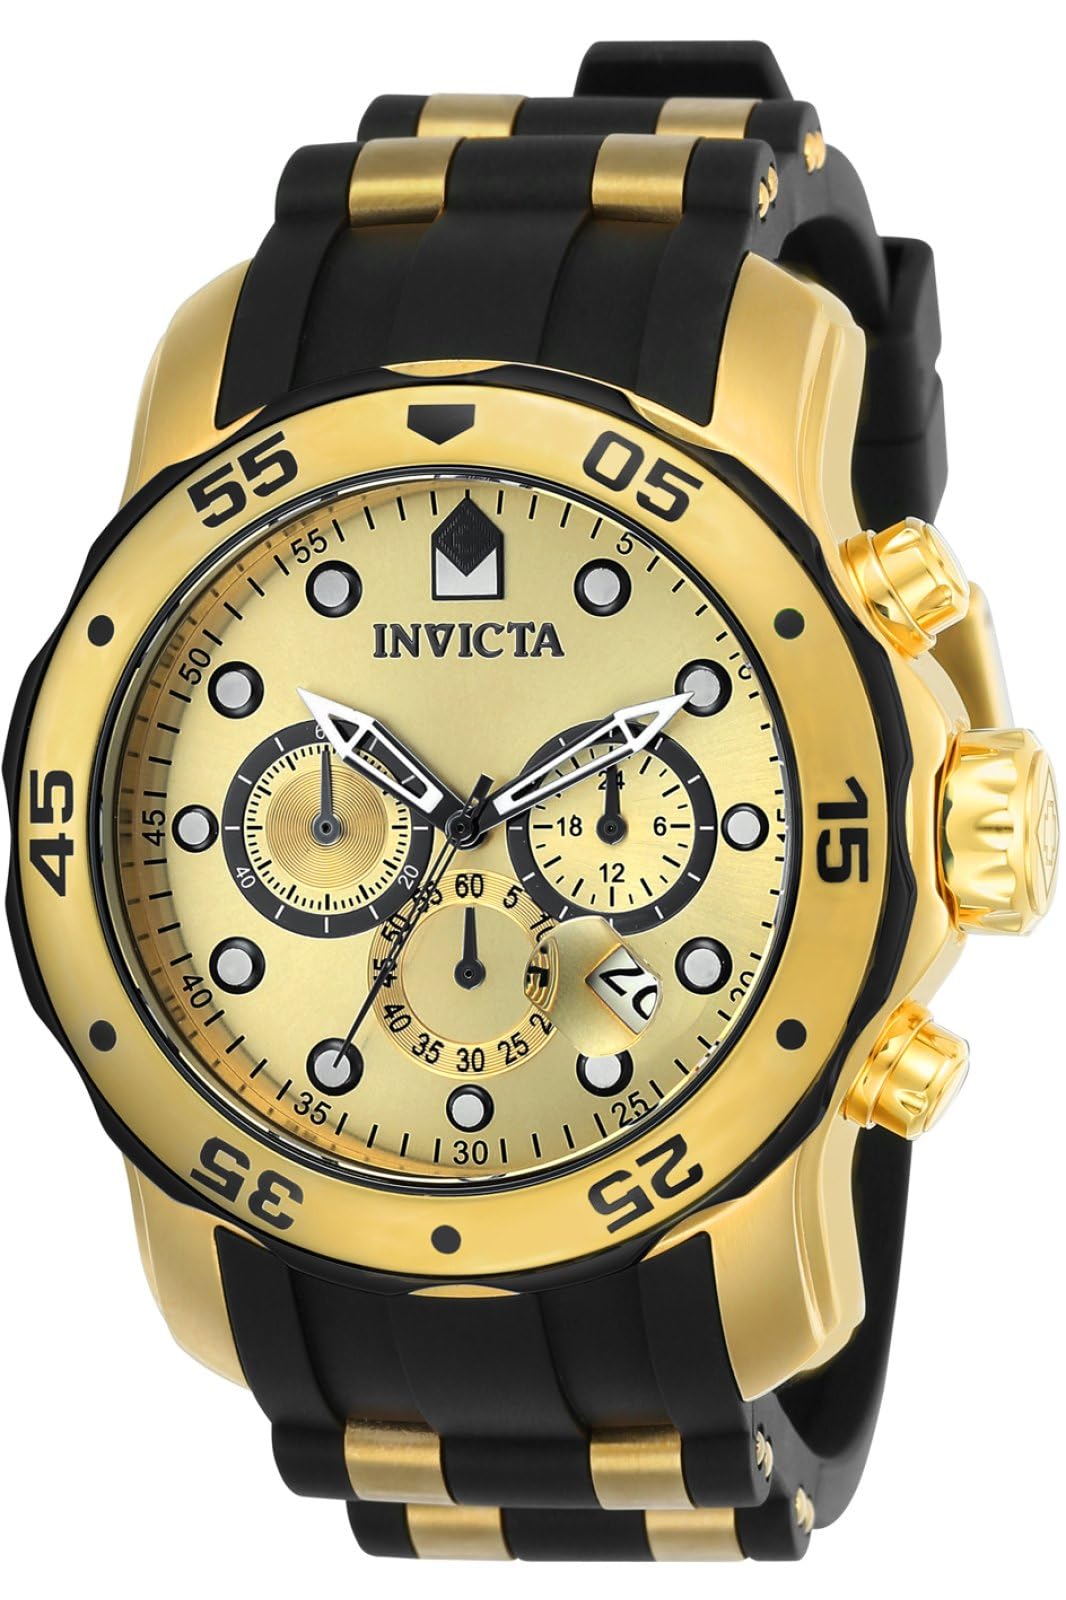 Invicta Pro Diver - SCUBA Stainless Steel Men's Quartz Watch - 48mm